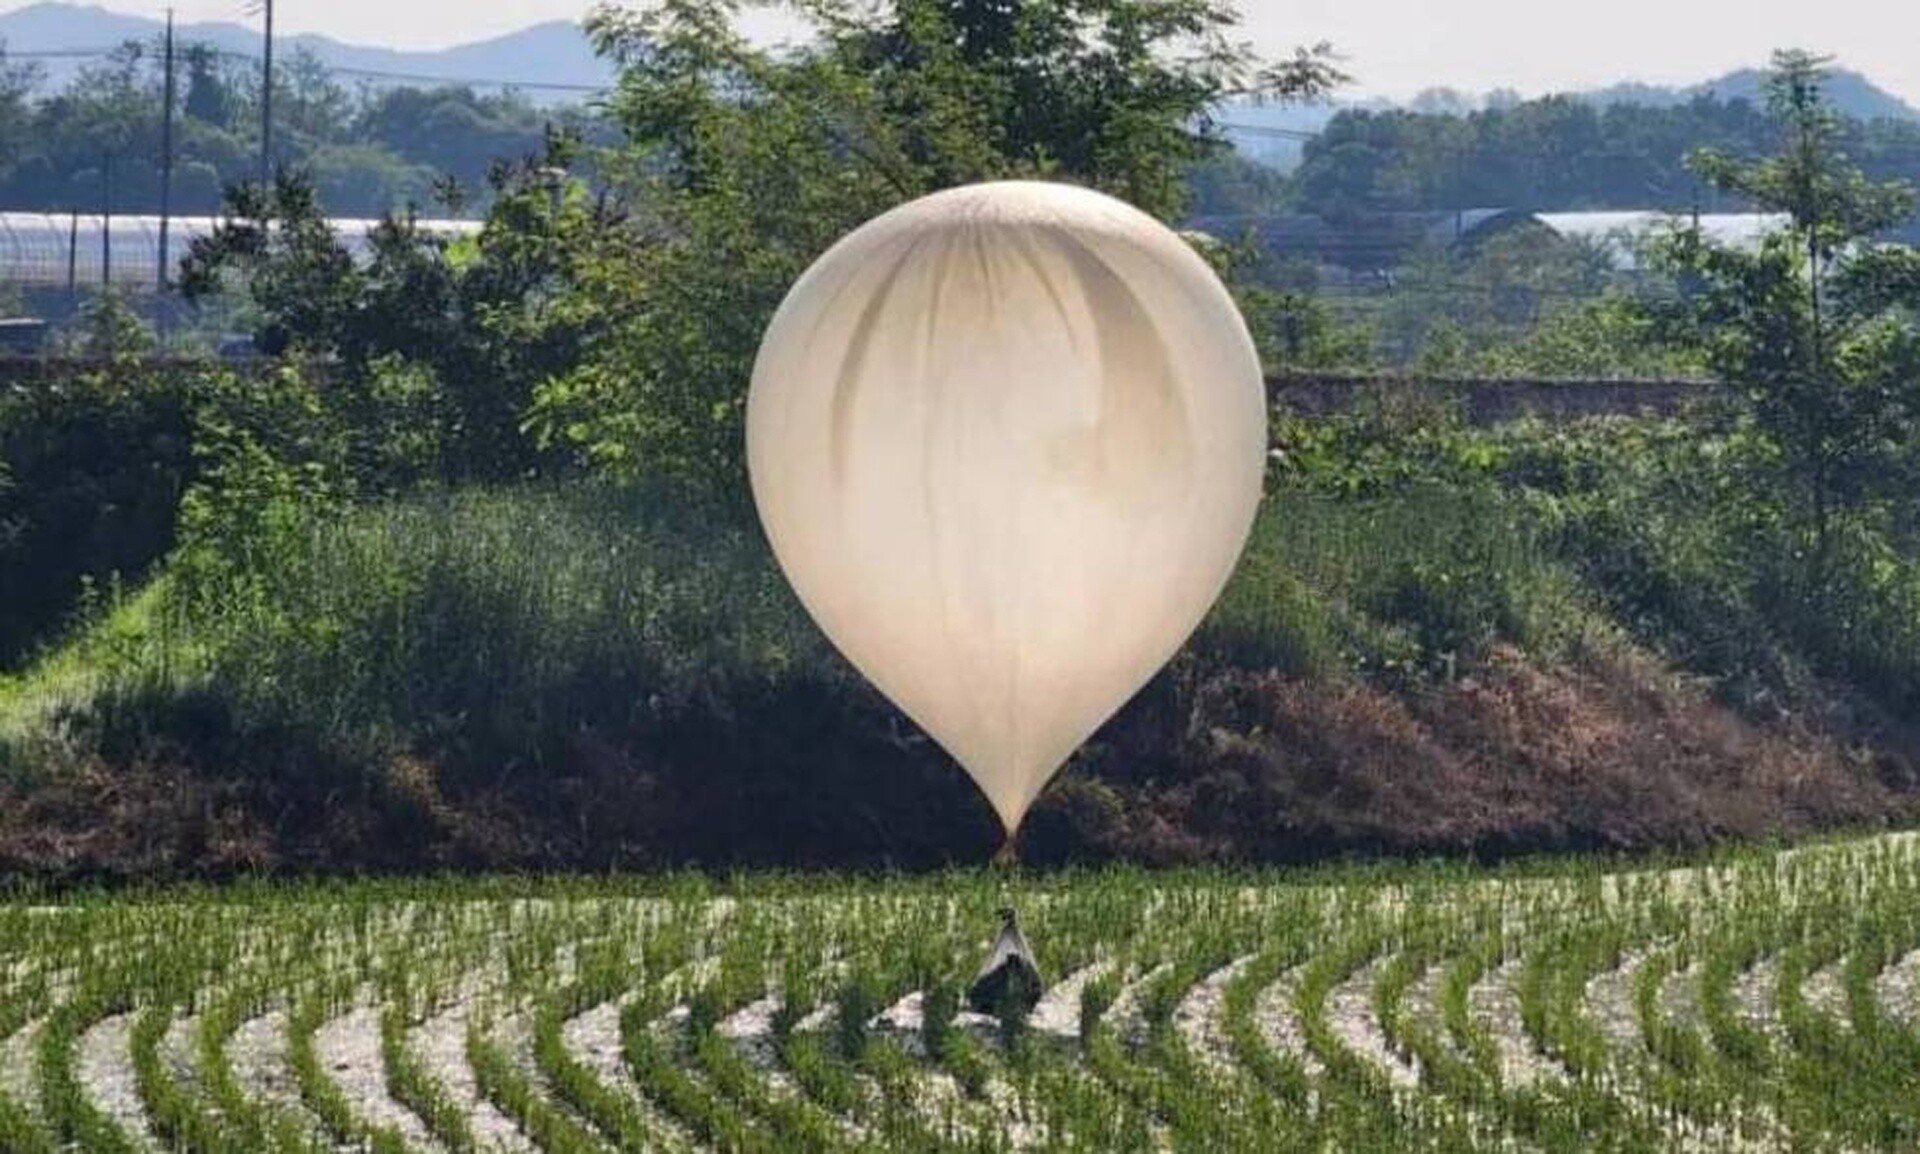 baloon.jpg